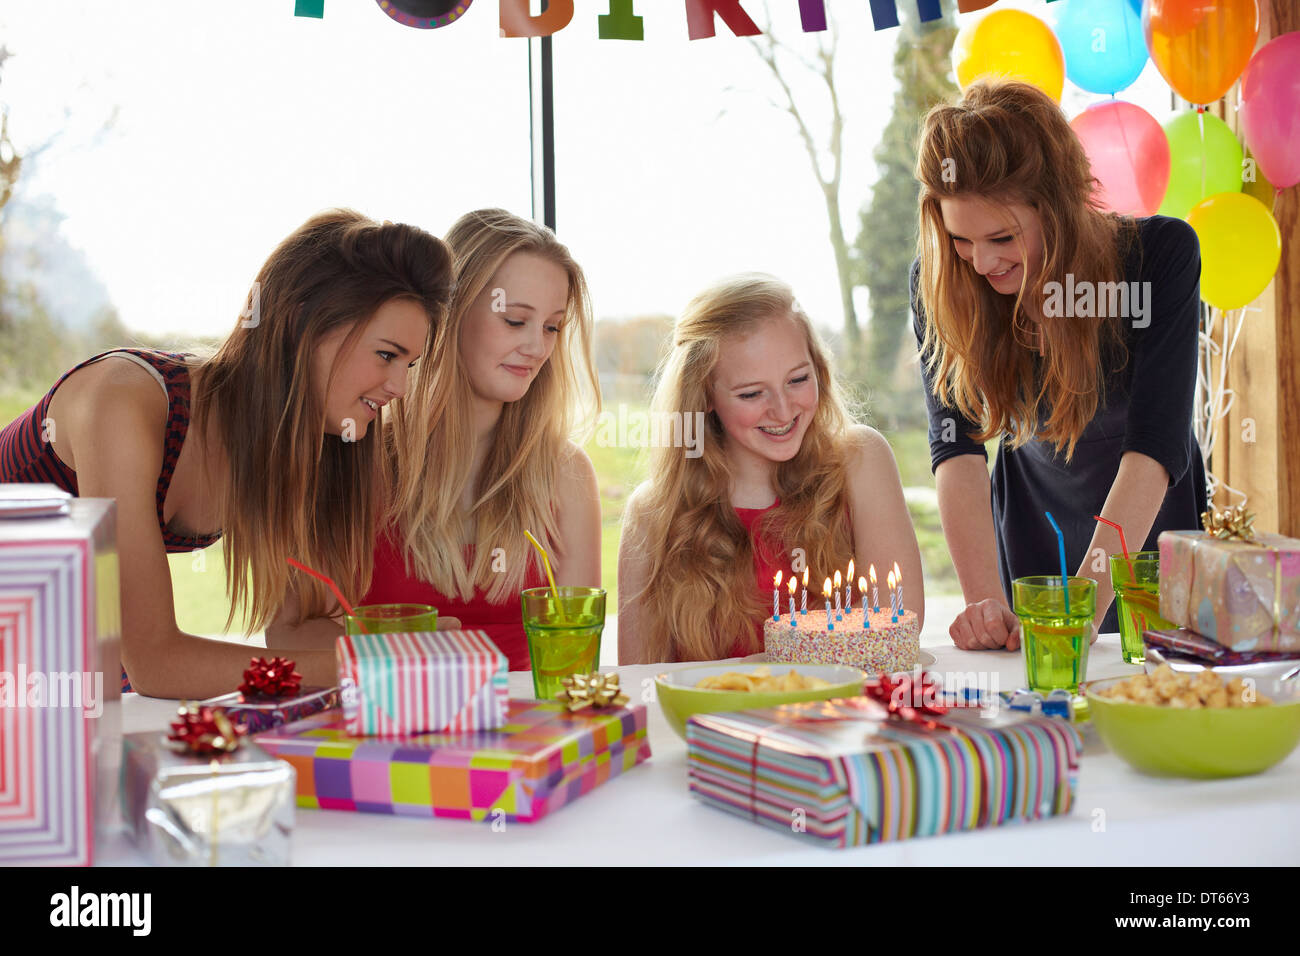 Teenage girl sharing birthday cake with friends Stock Photo